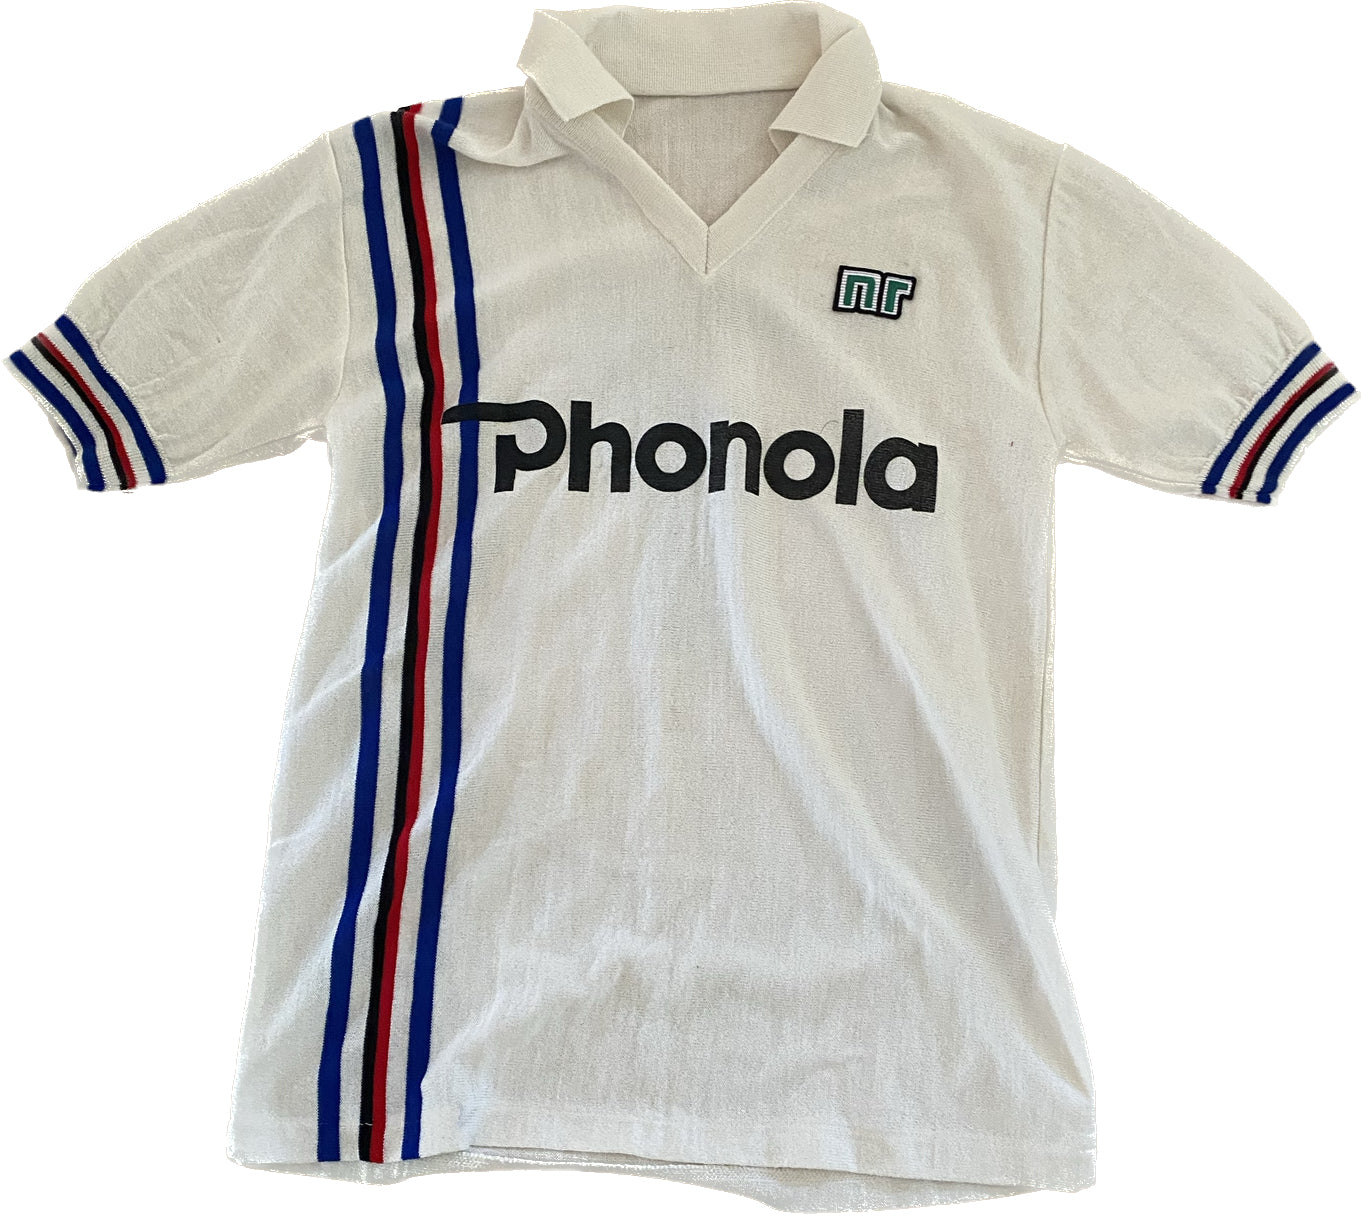 Sampdoria fanshirt 1980s